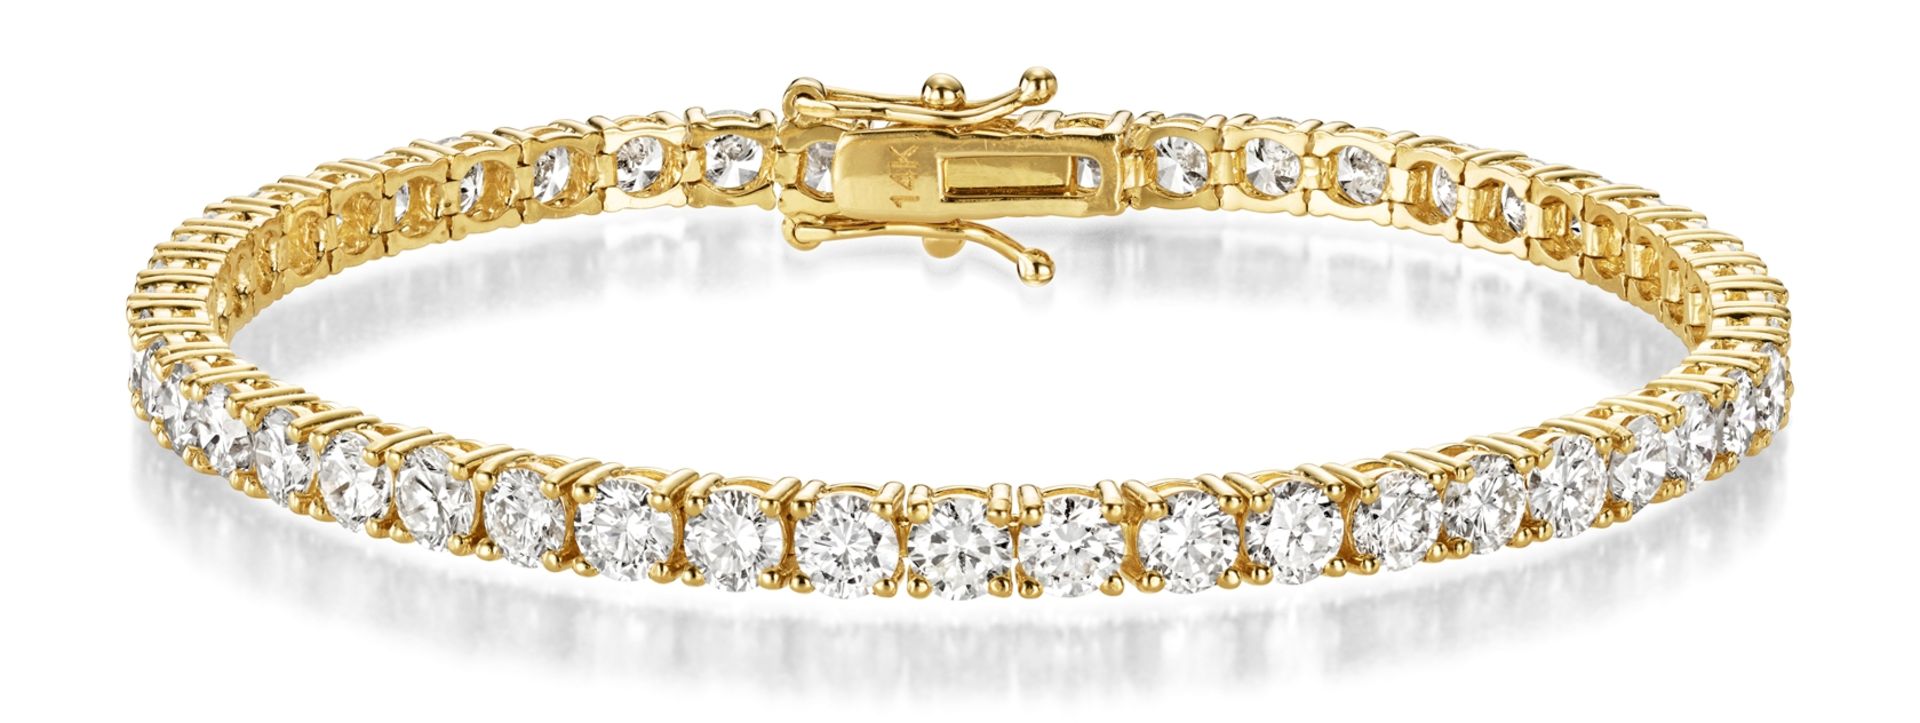 Alliance bracelet with brilliant-cut diamonds totalling over 9 carats